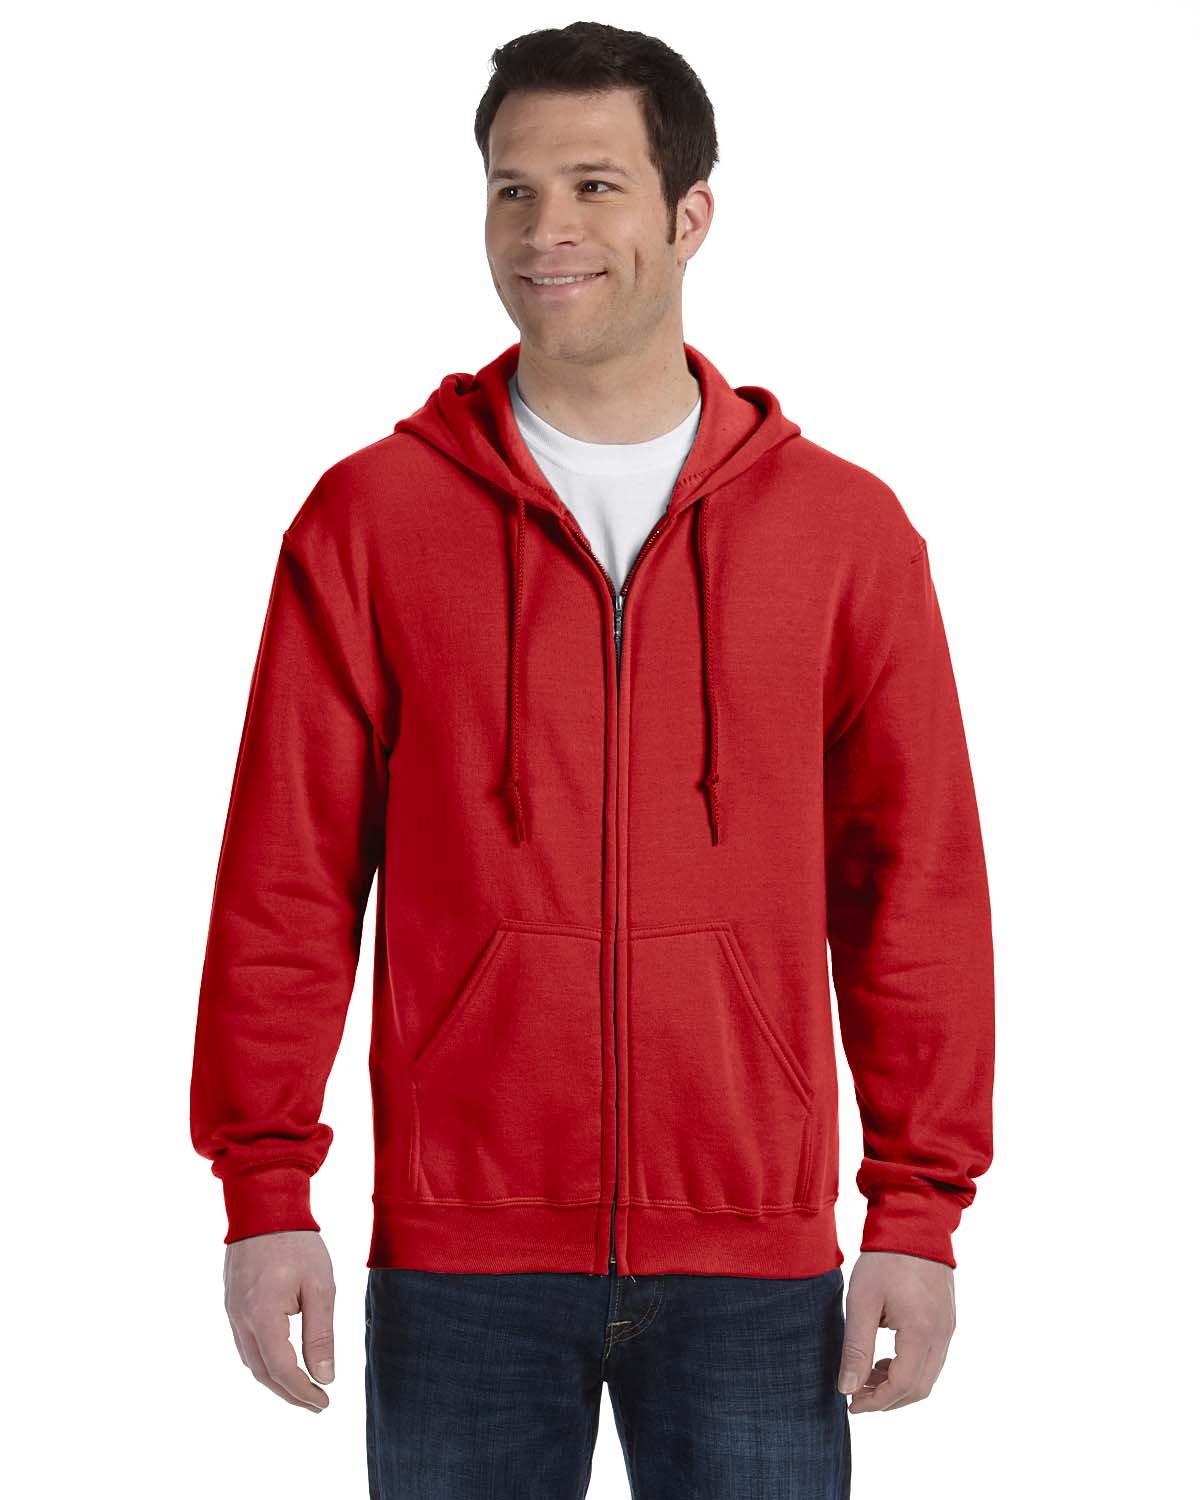 Gildan 18600 Size Chart, Gildan G186 Zipped Sweatshirt Size Table, Hooded  Full Zip Size Guide 